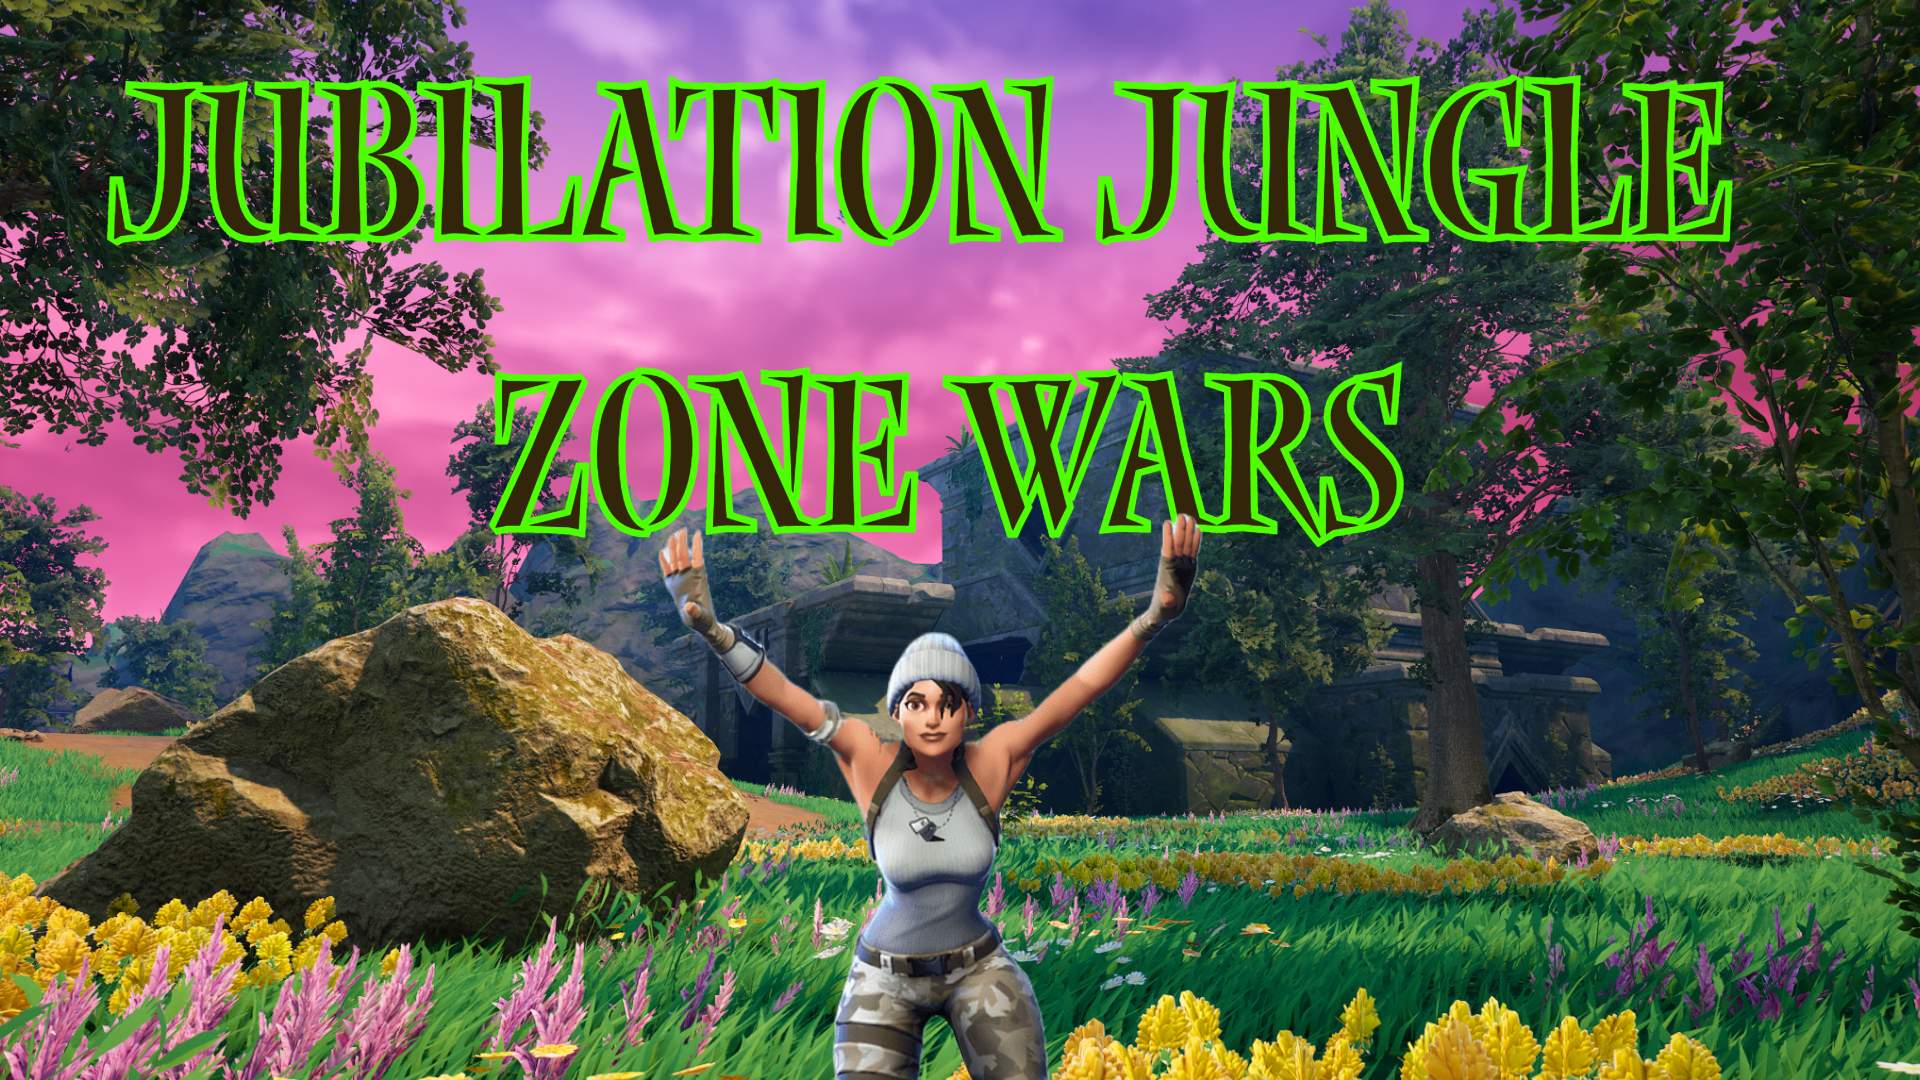 Jubilation Jungle Zone Wars